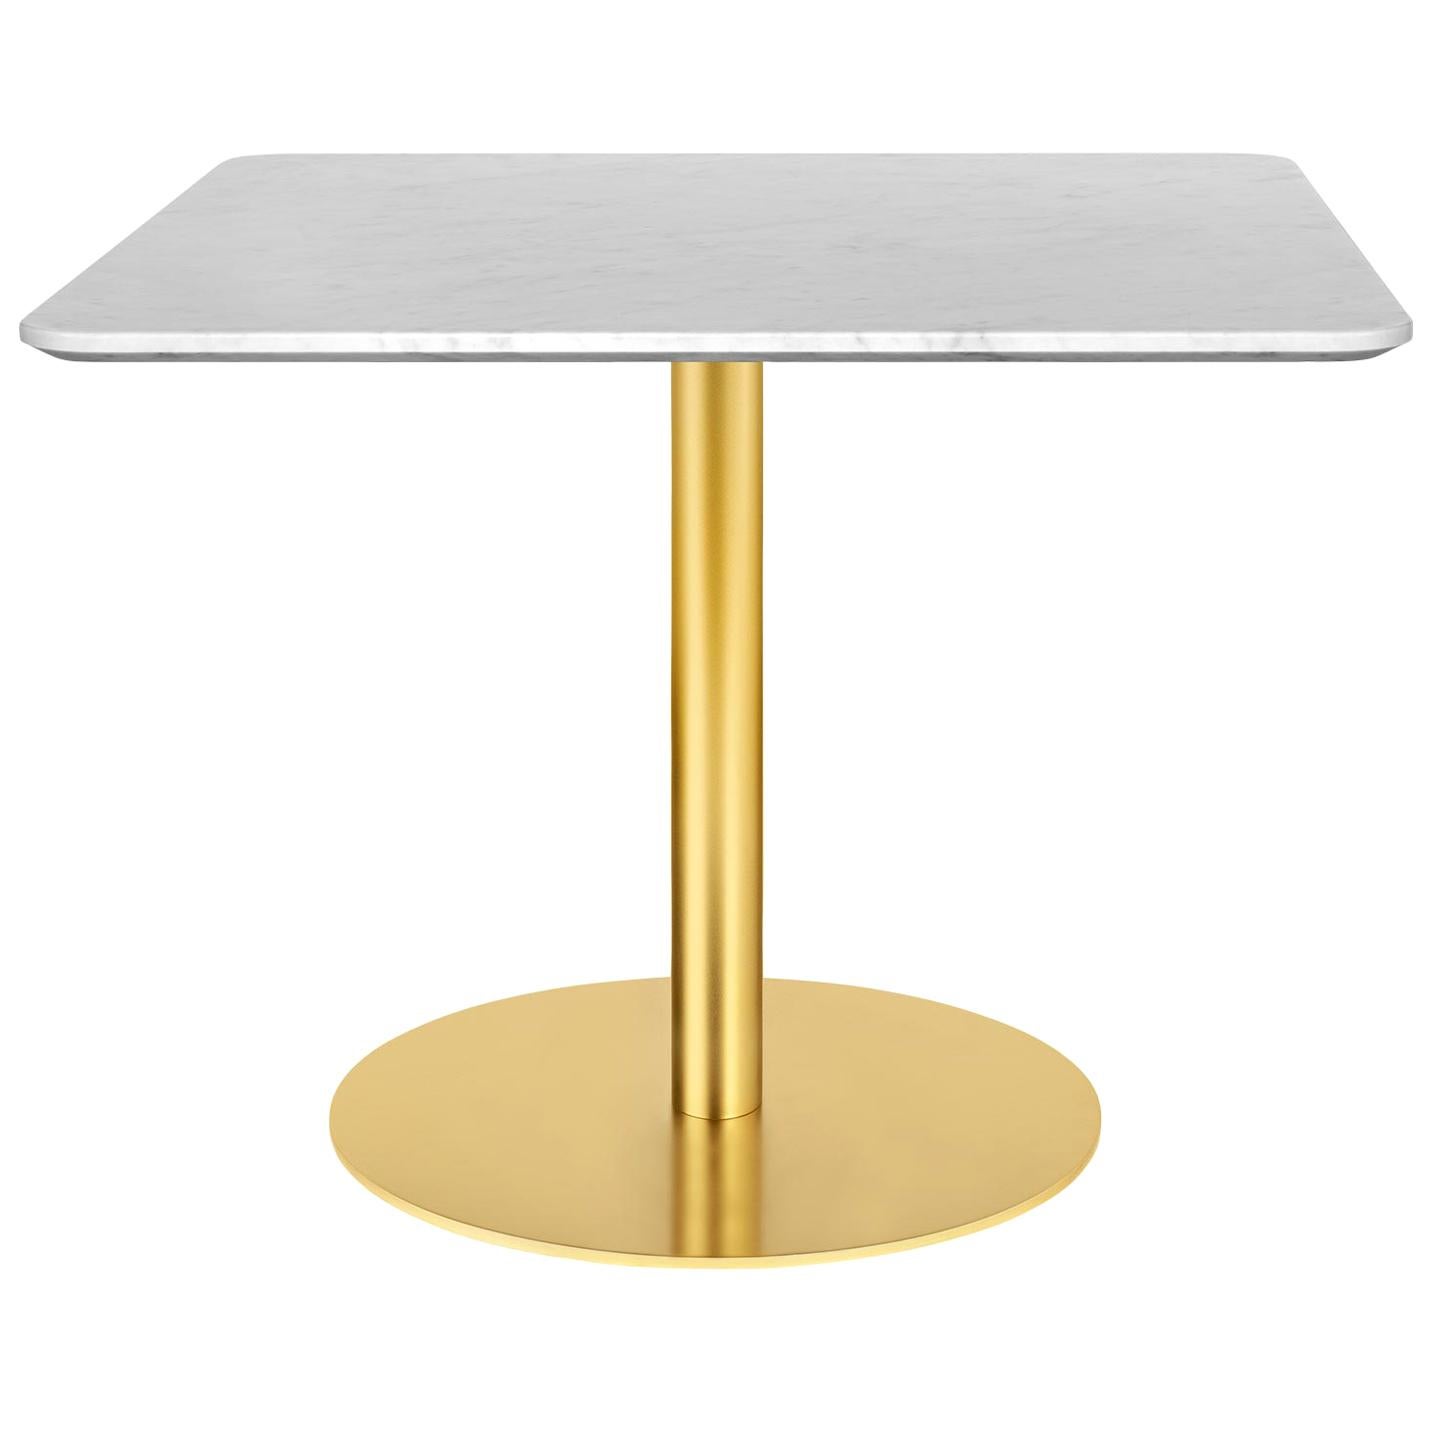 Table de salon 1,0, carrée, base ronde en laiton, grande, marbre